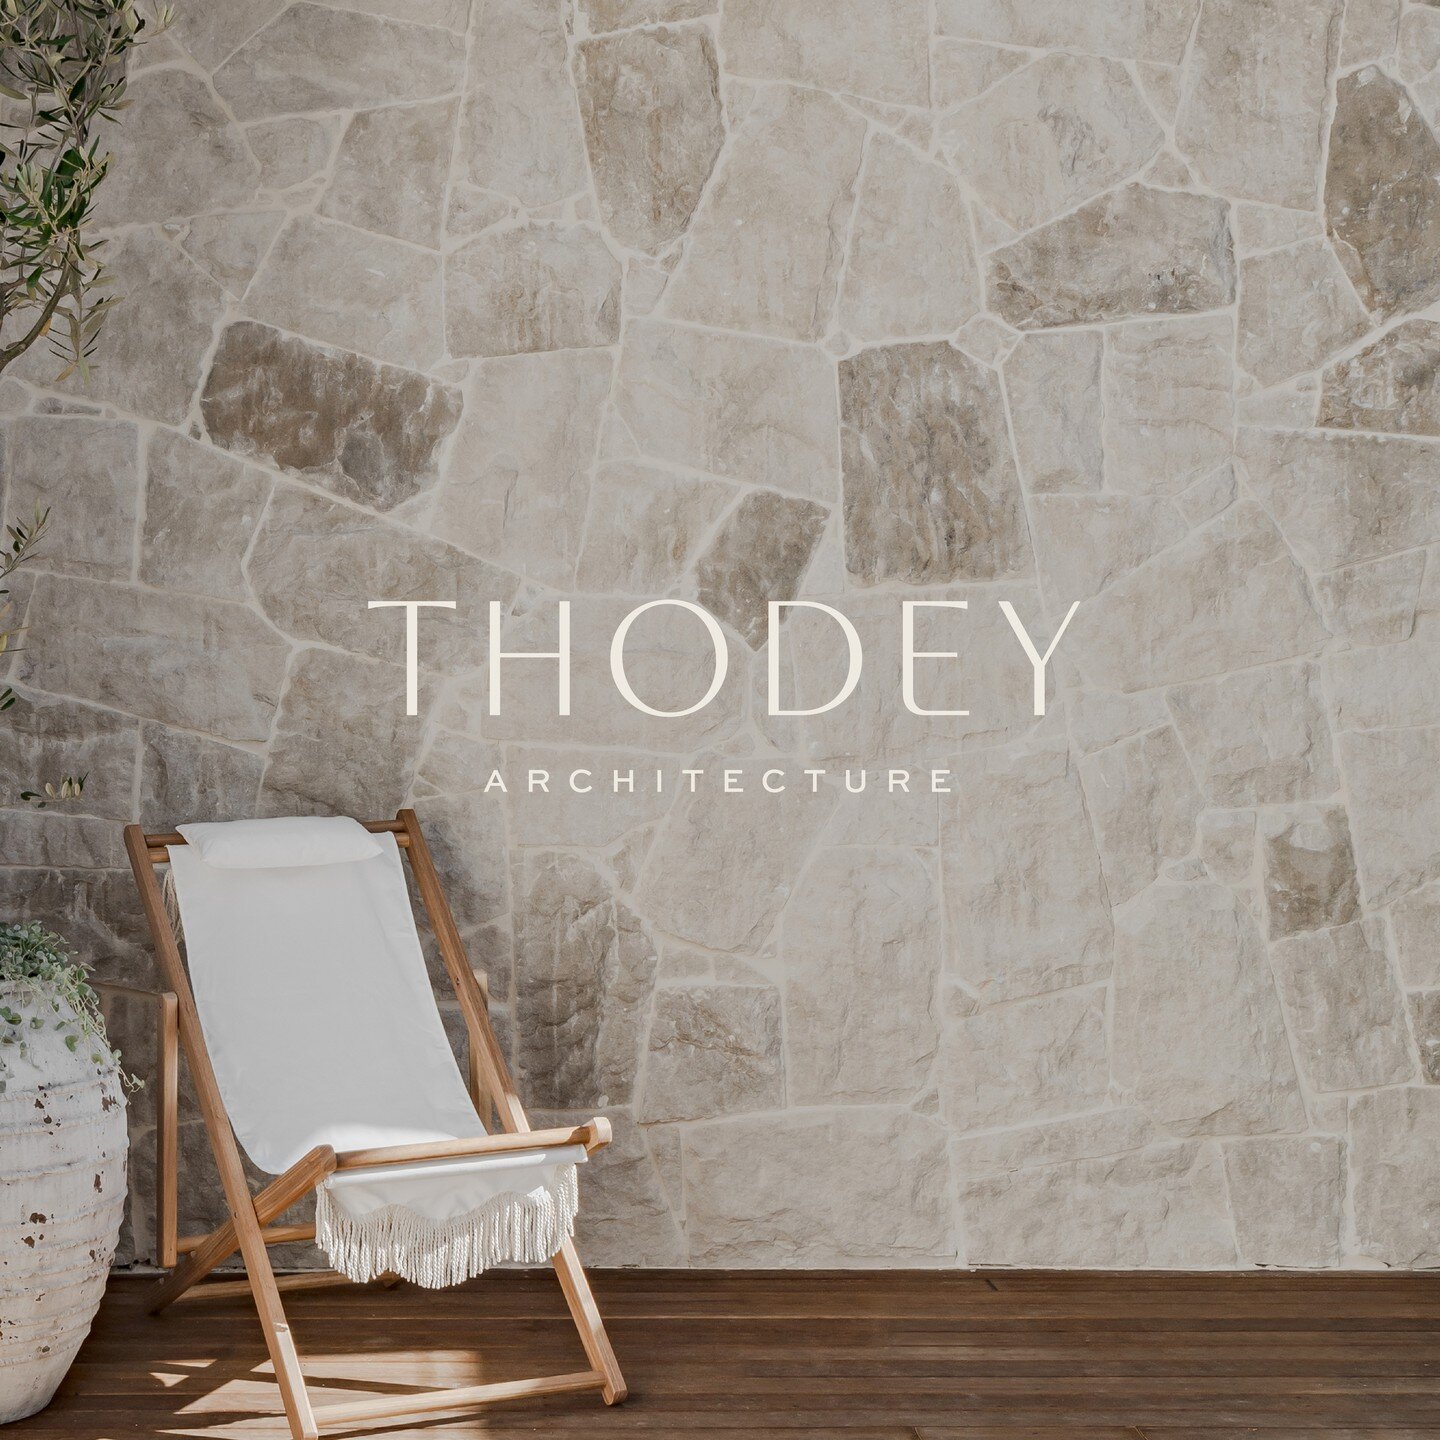 Branding for Thodey Architecture who create elegant, practical and efficient spaces. @thodey.design 
..

#saltcreativestudio #branding #brandingagency #architecture #architects #logodesigns